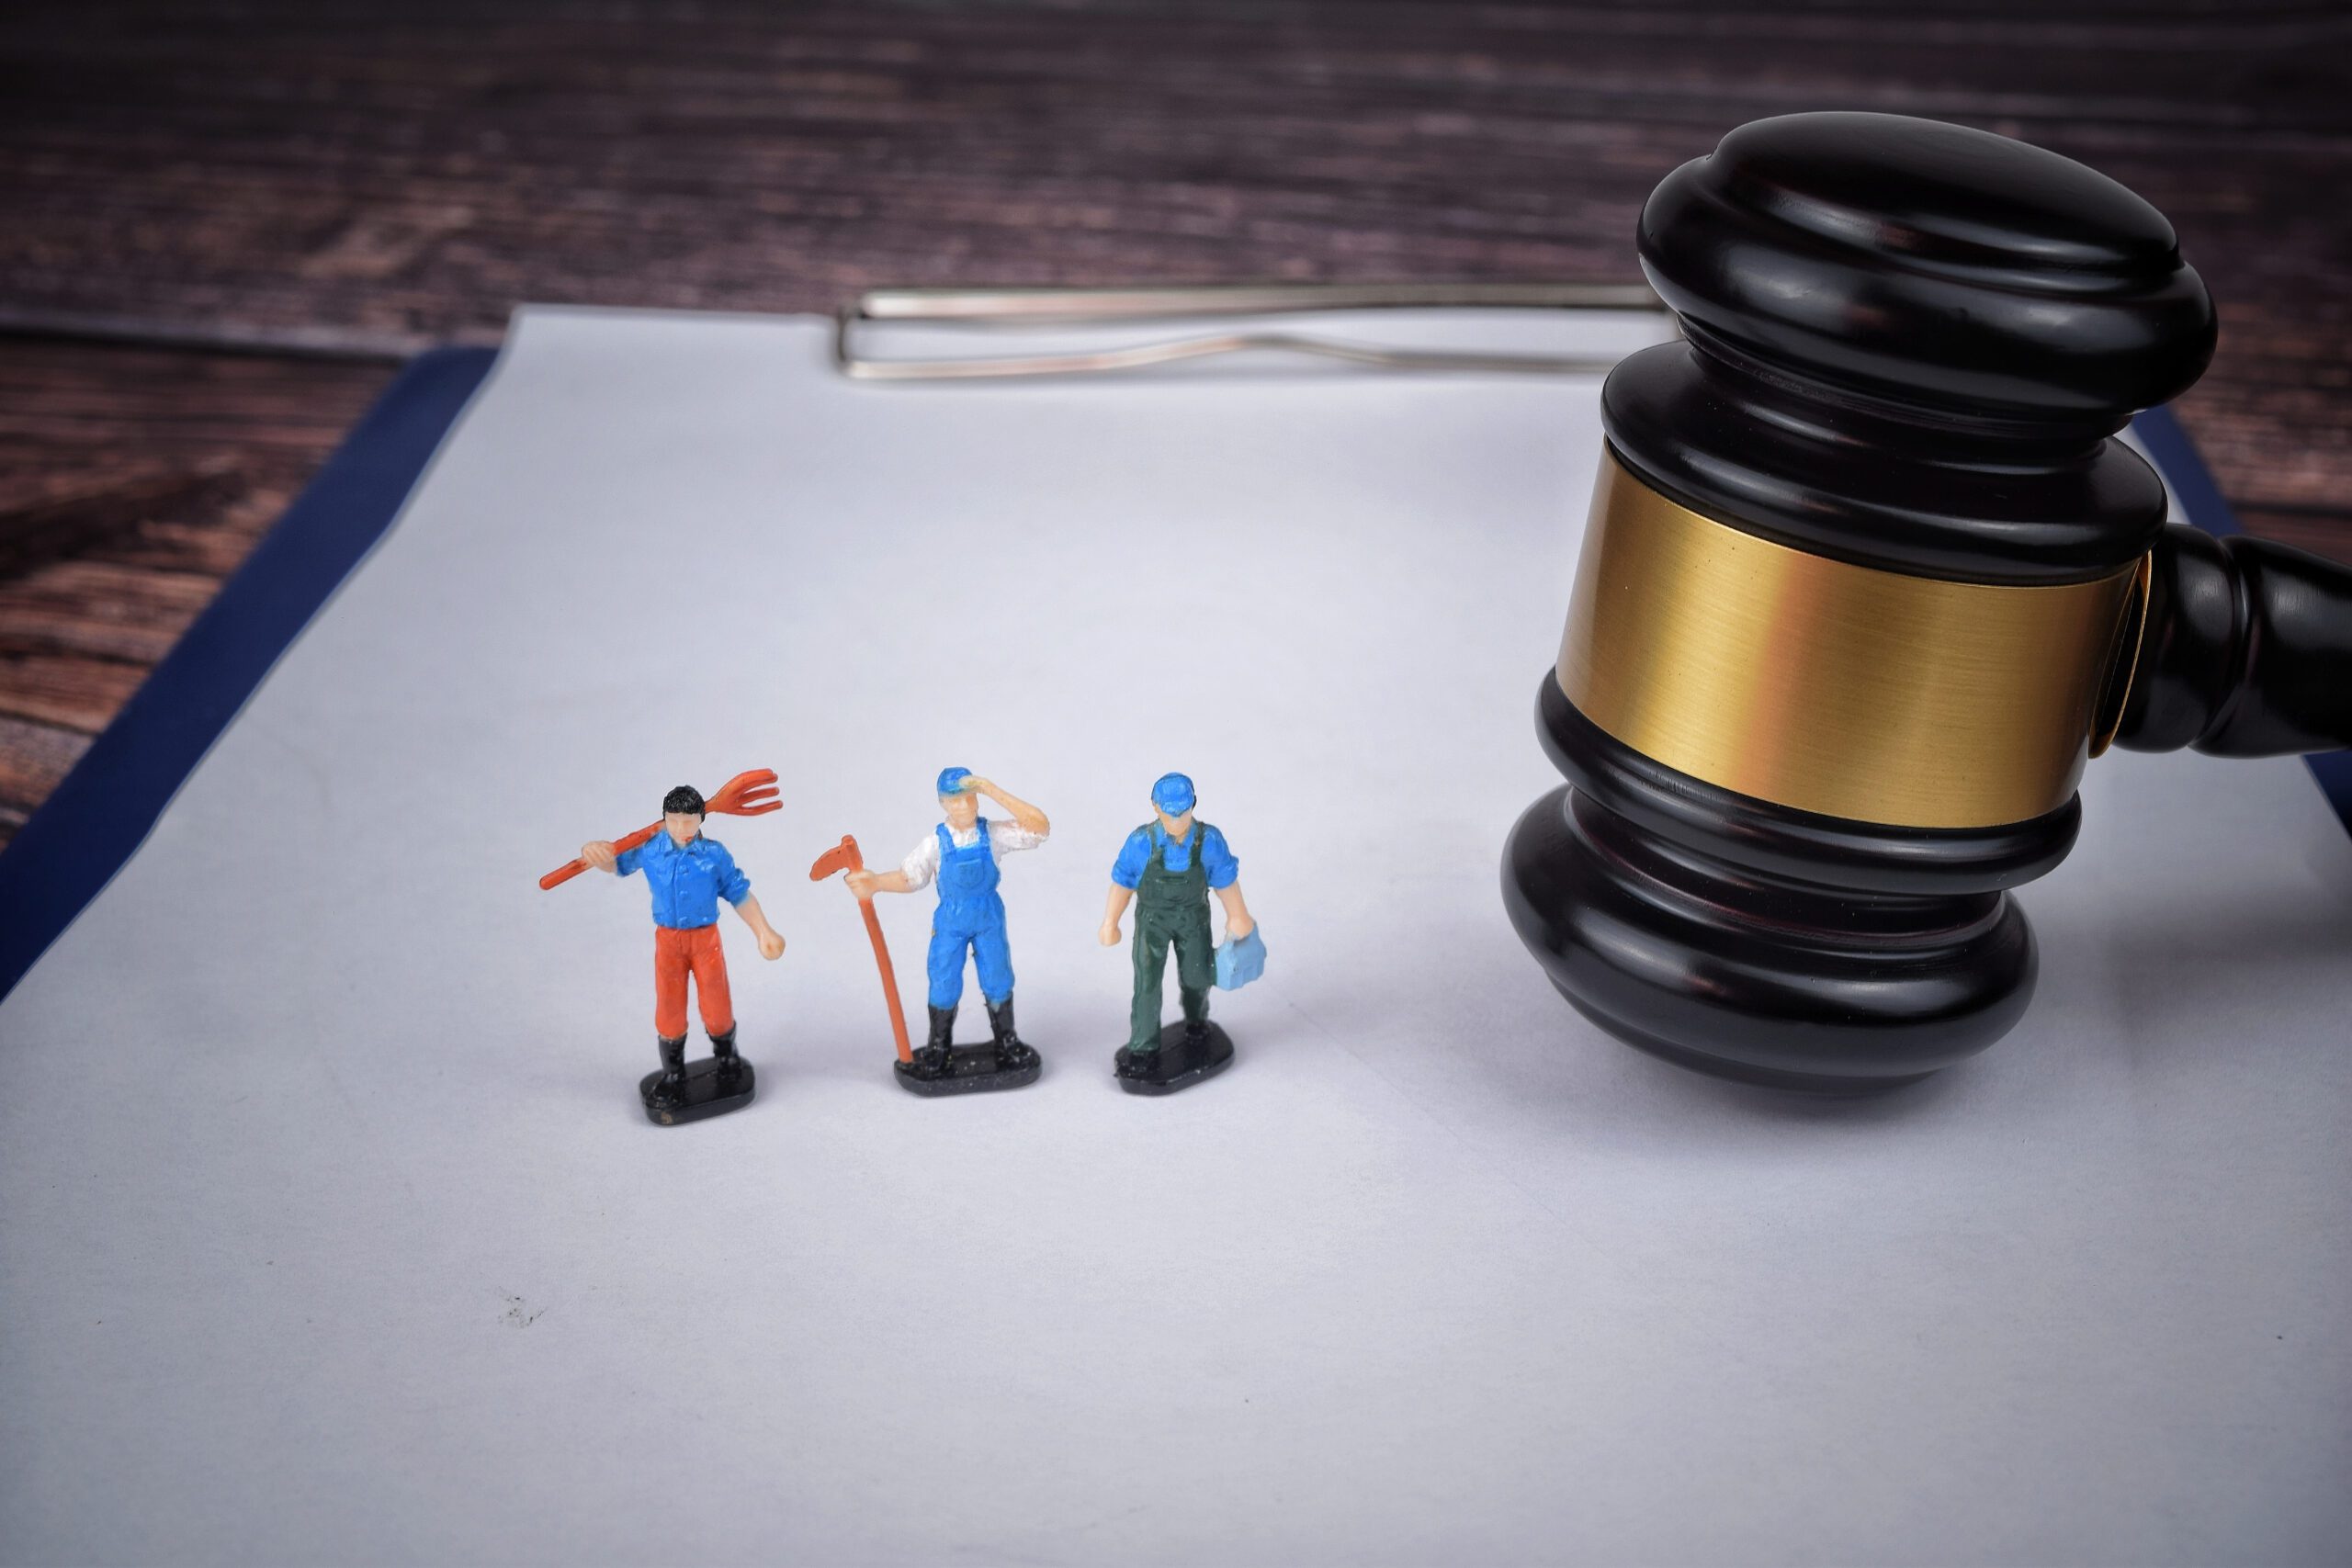 Advogado trabalhista online — Tire suas dúvidas